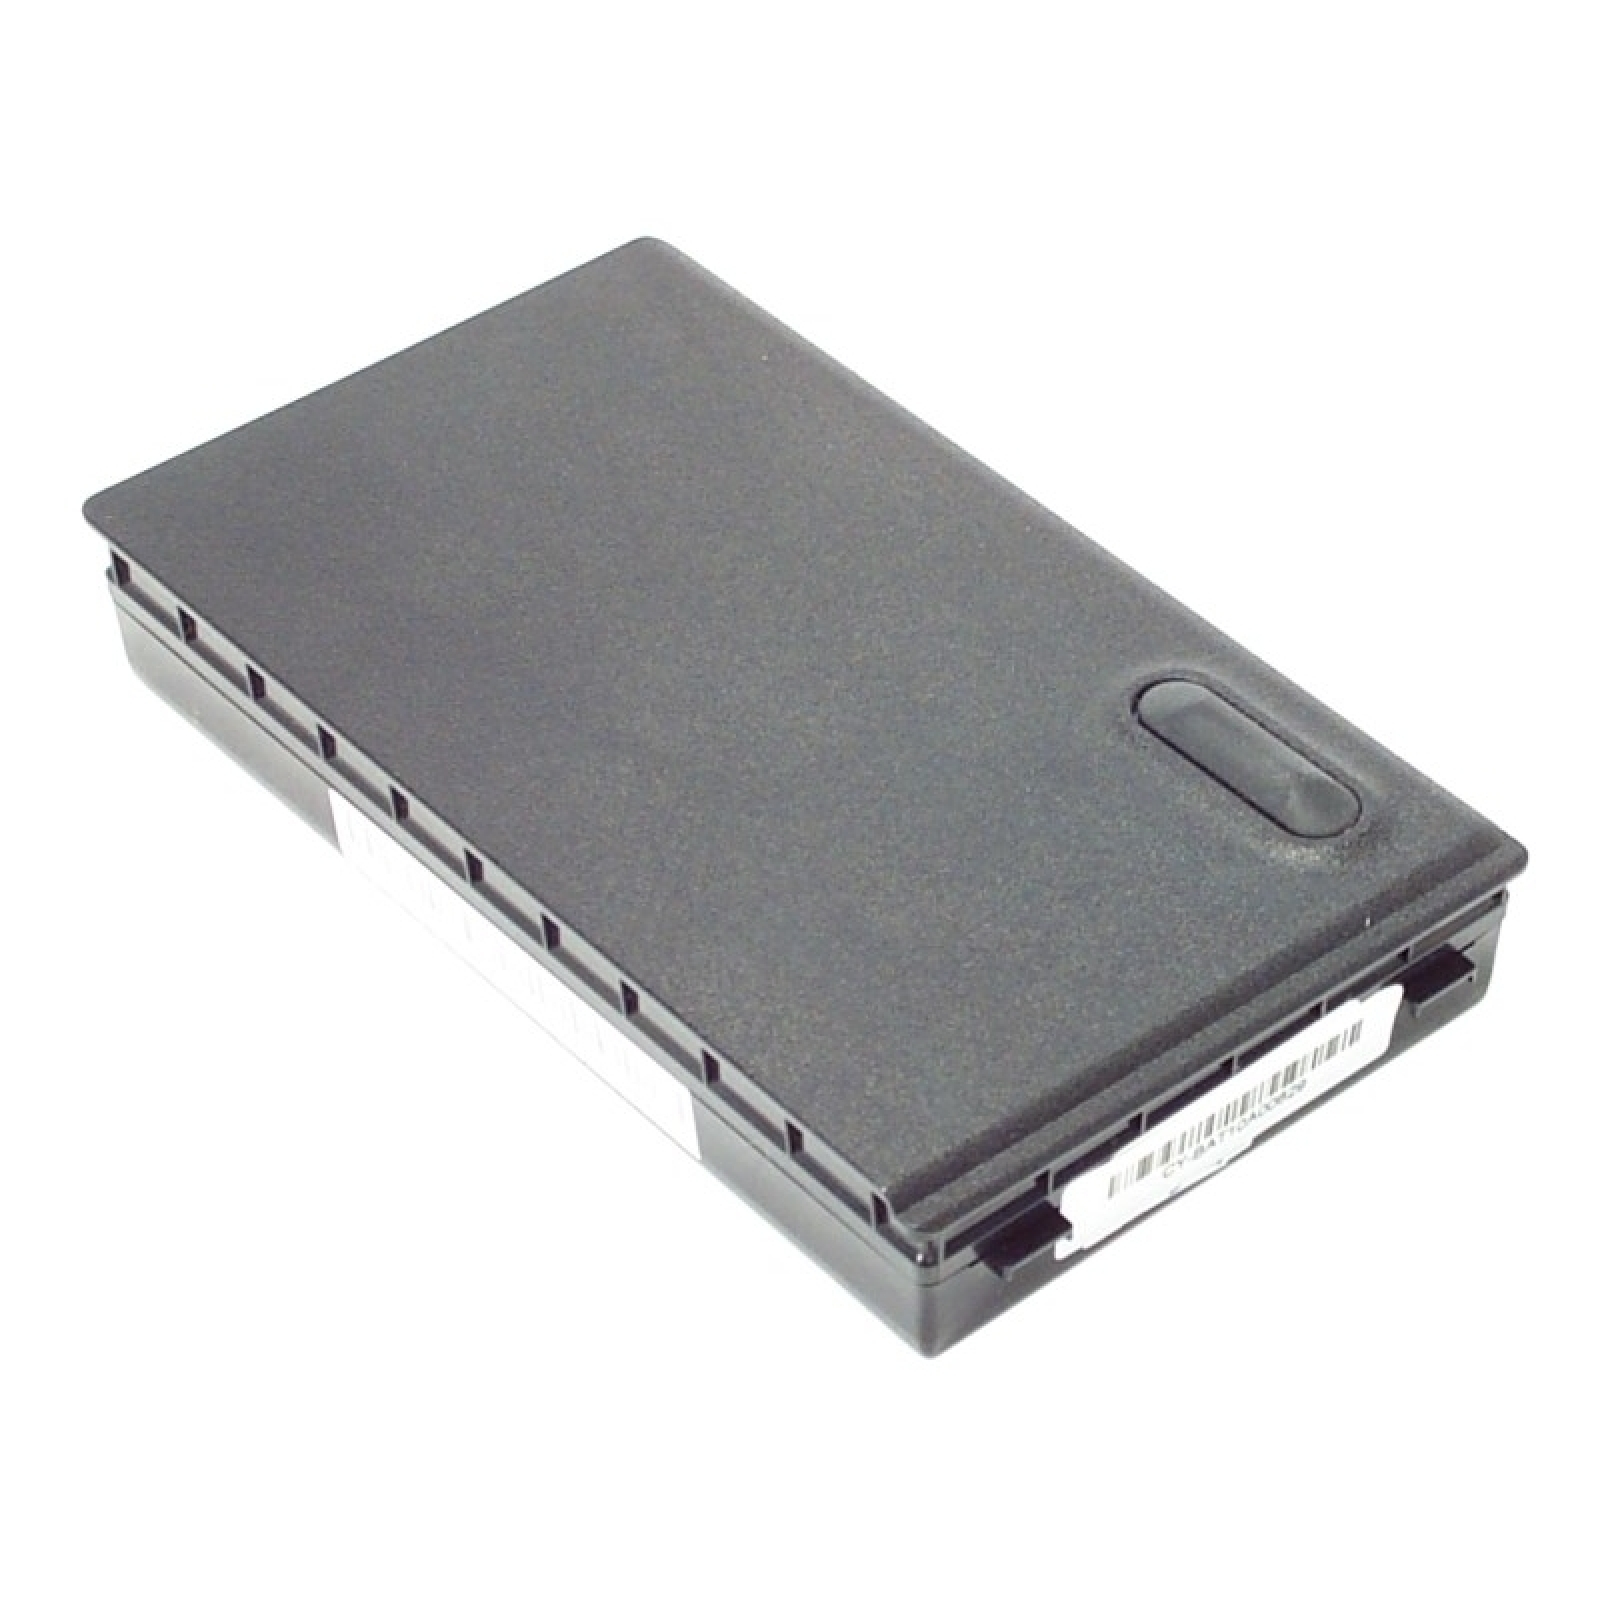 Lithium-Ionen Notebook-Akku, mAh (LiIon) 4400mAh 10.8V, 4400 LiIon, N81A 10.8 Akku ASUS MTXTEC für Volt,